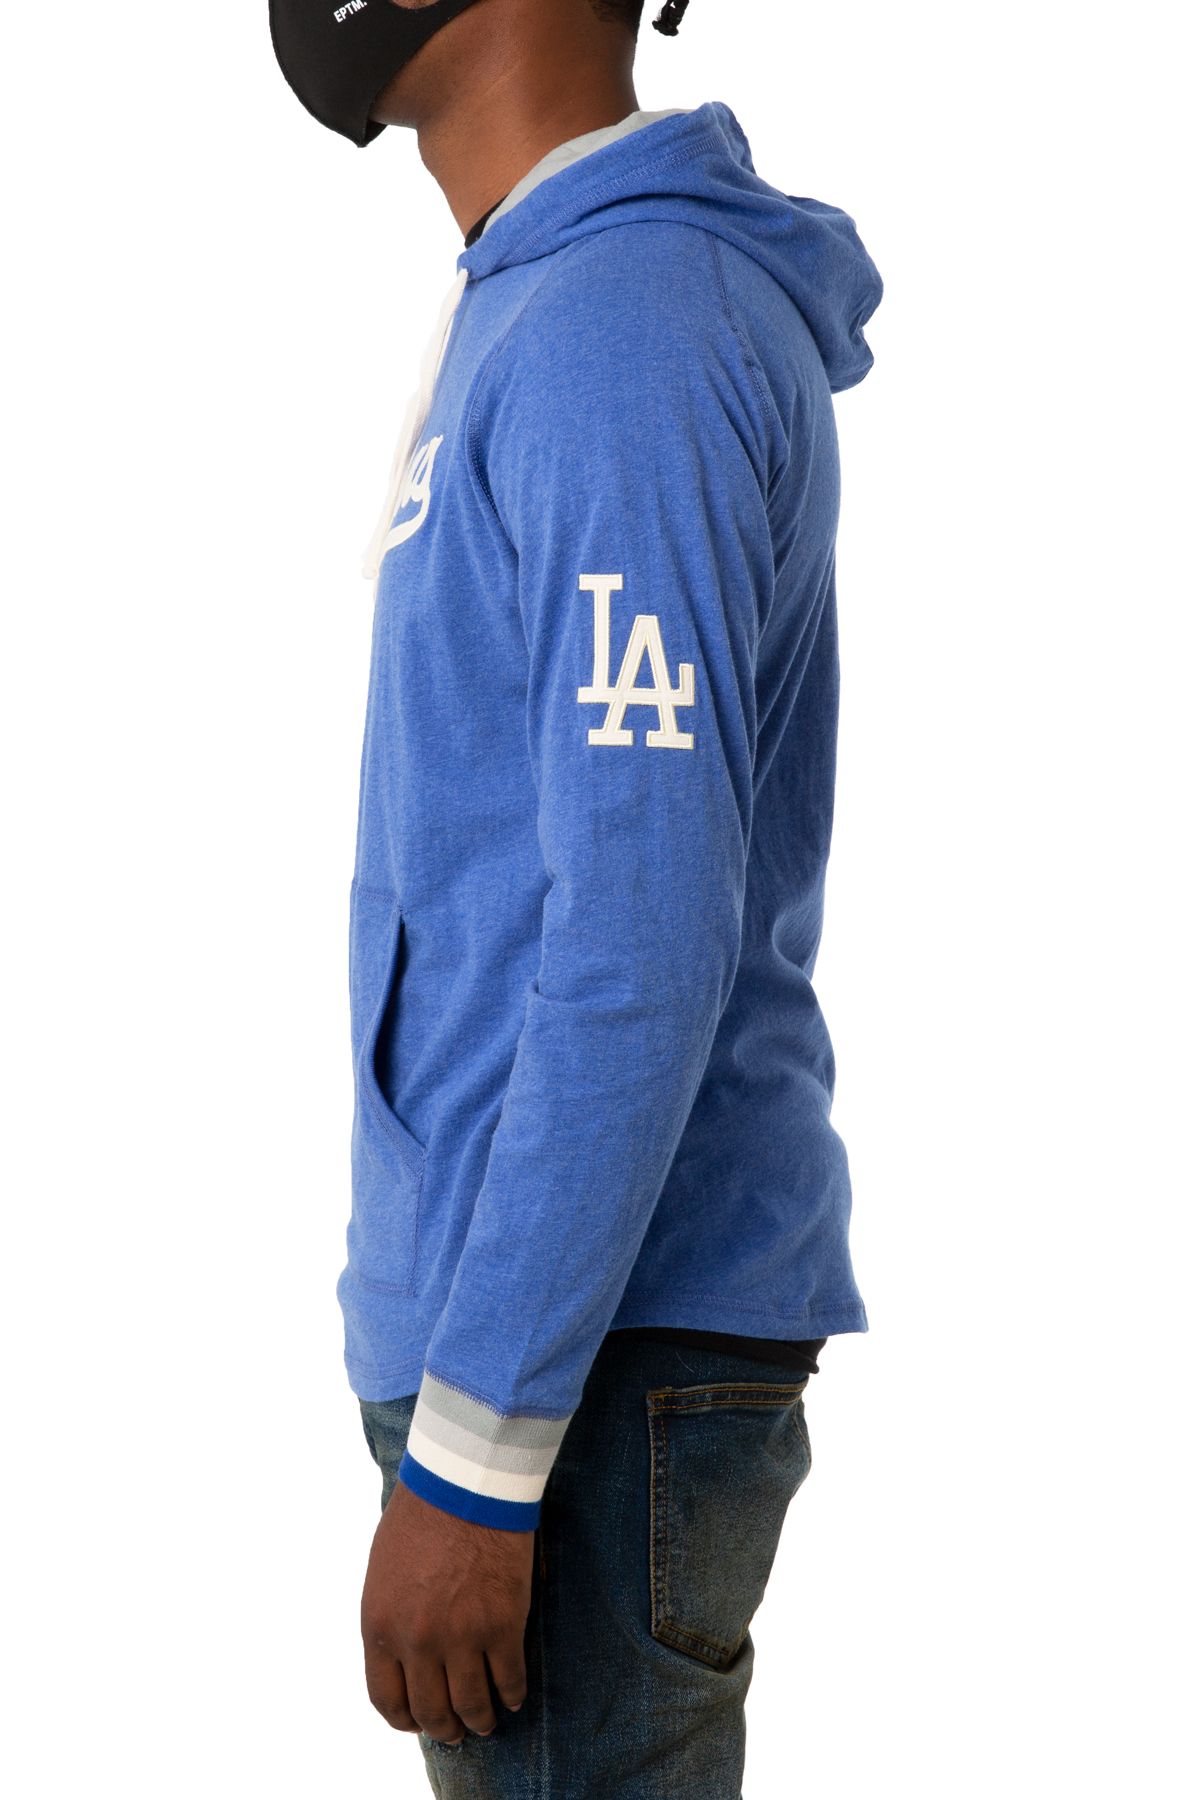 Lids Los Angeles Dodgers Levelwear City Connect Phase Core Hoodie T-Shirt -  Royal